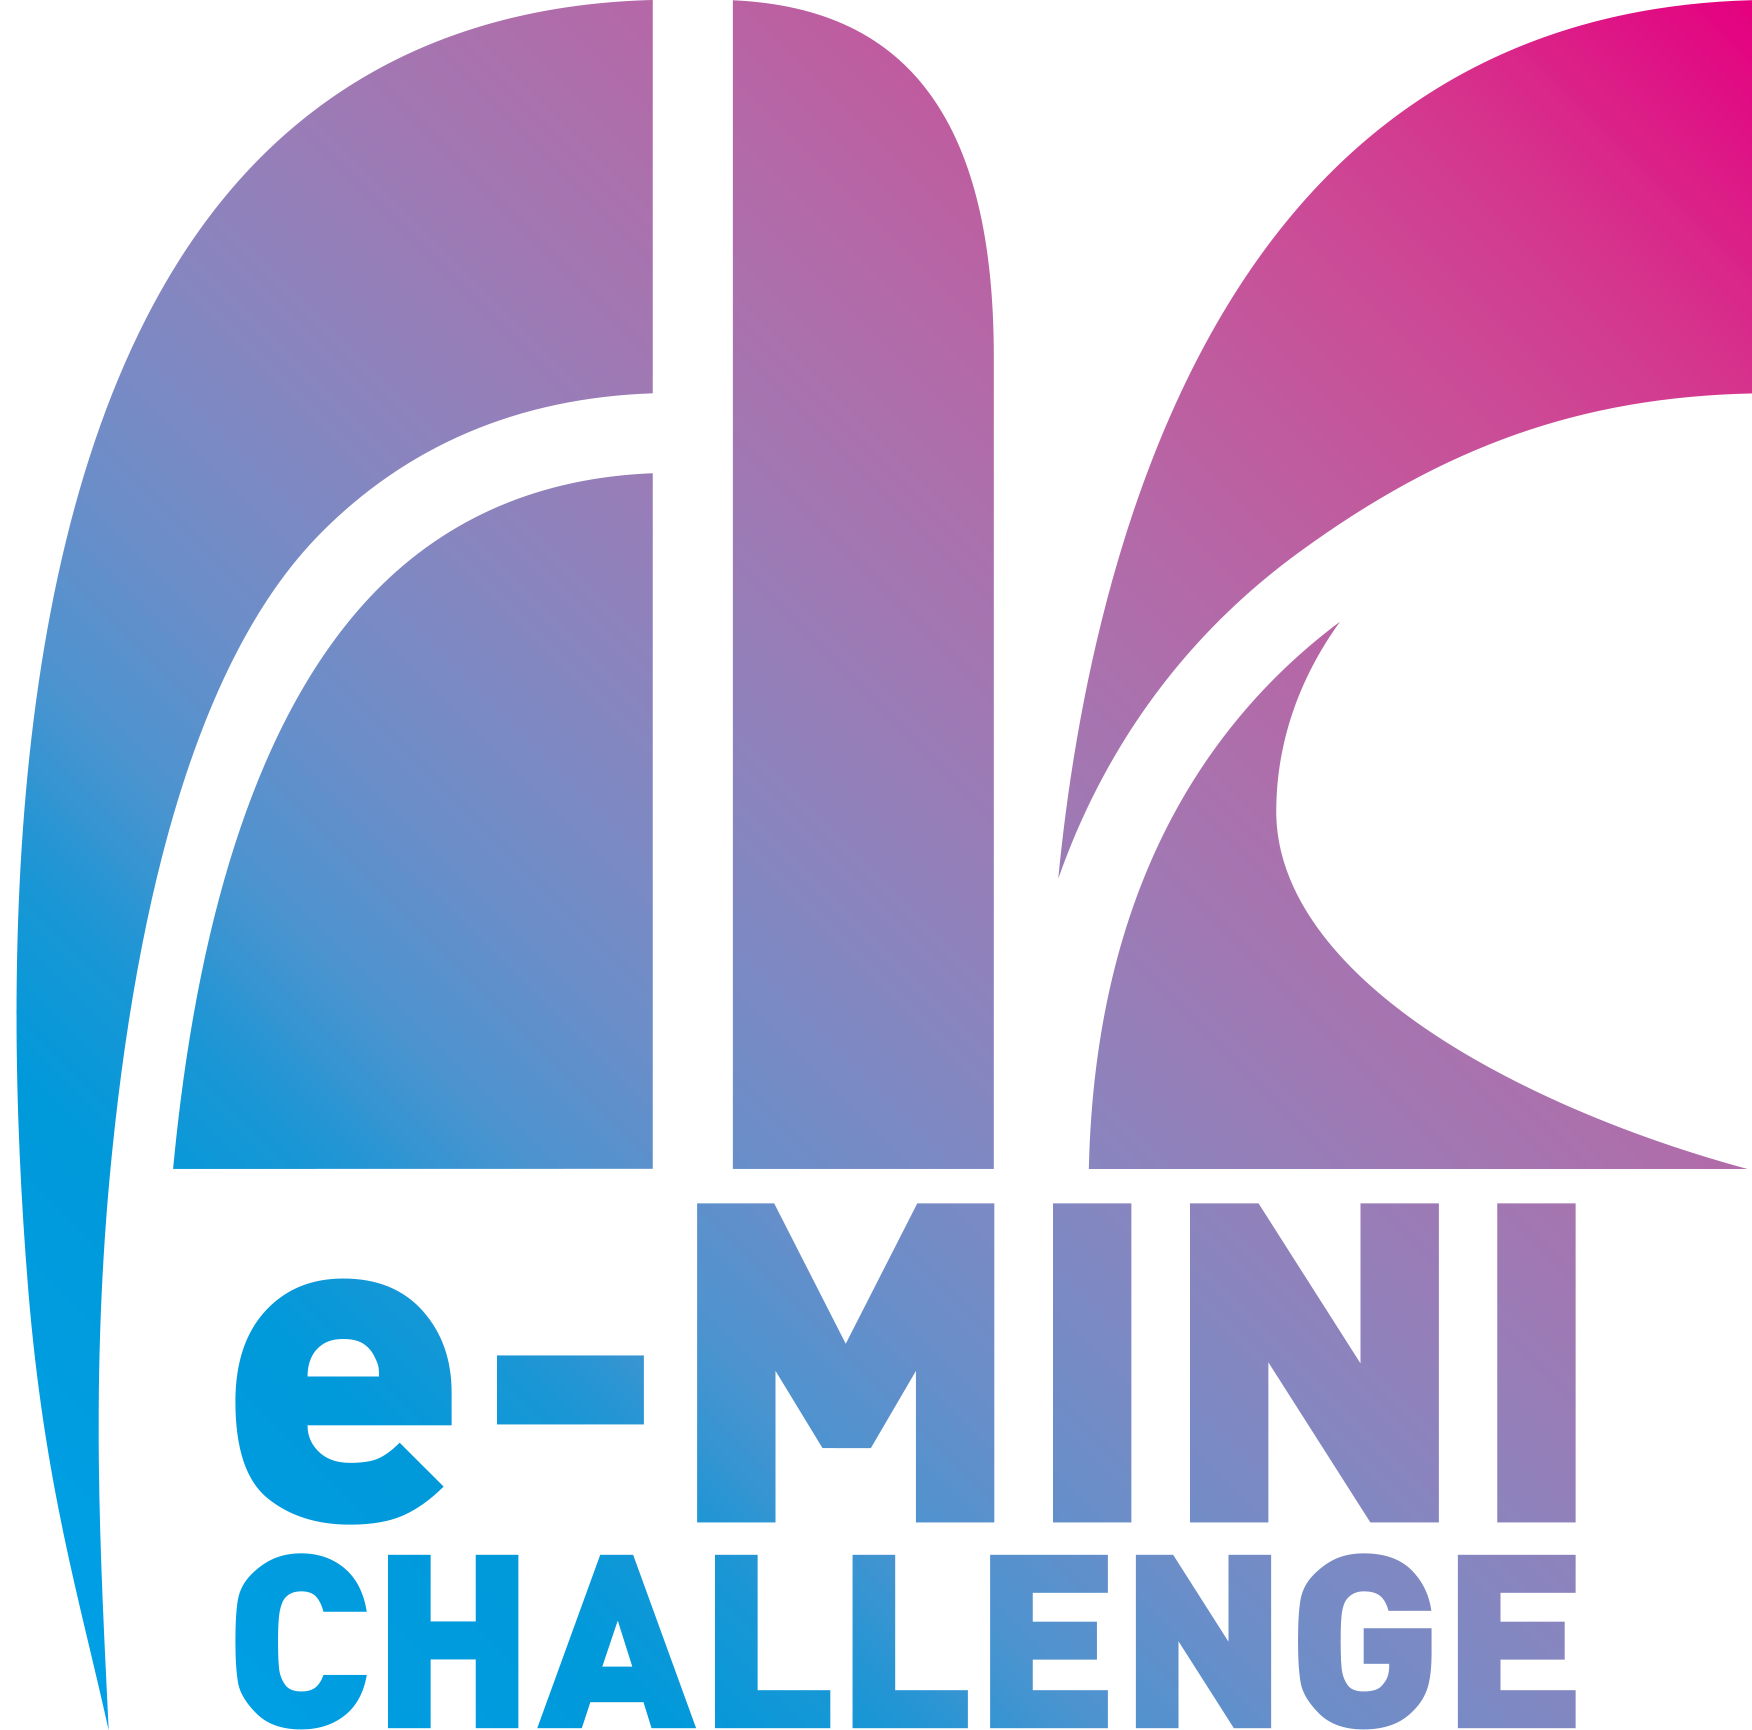 e-MINI CHALLENGE® 2020 S2 Rd.8 ポイントランキング更新